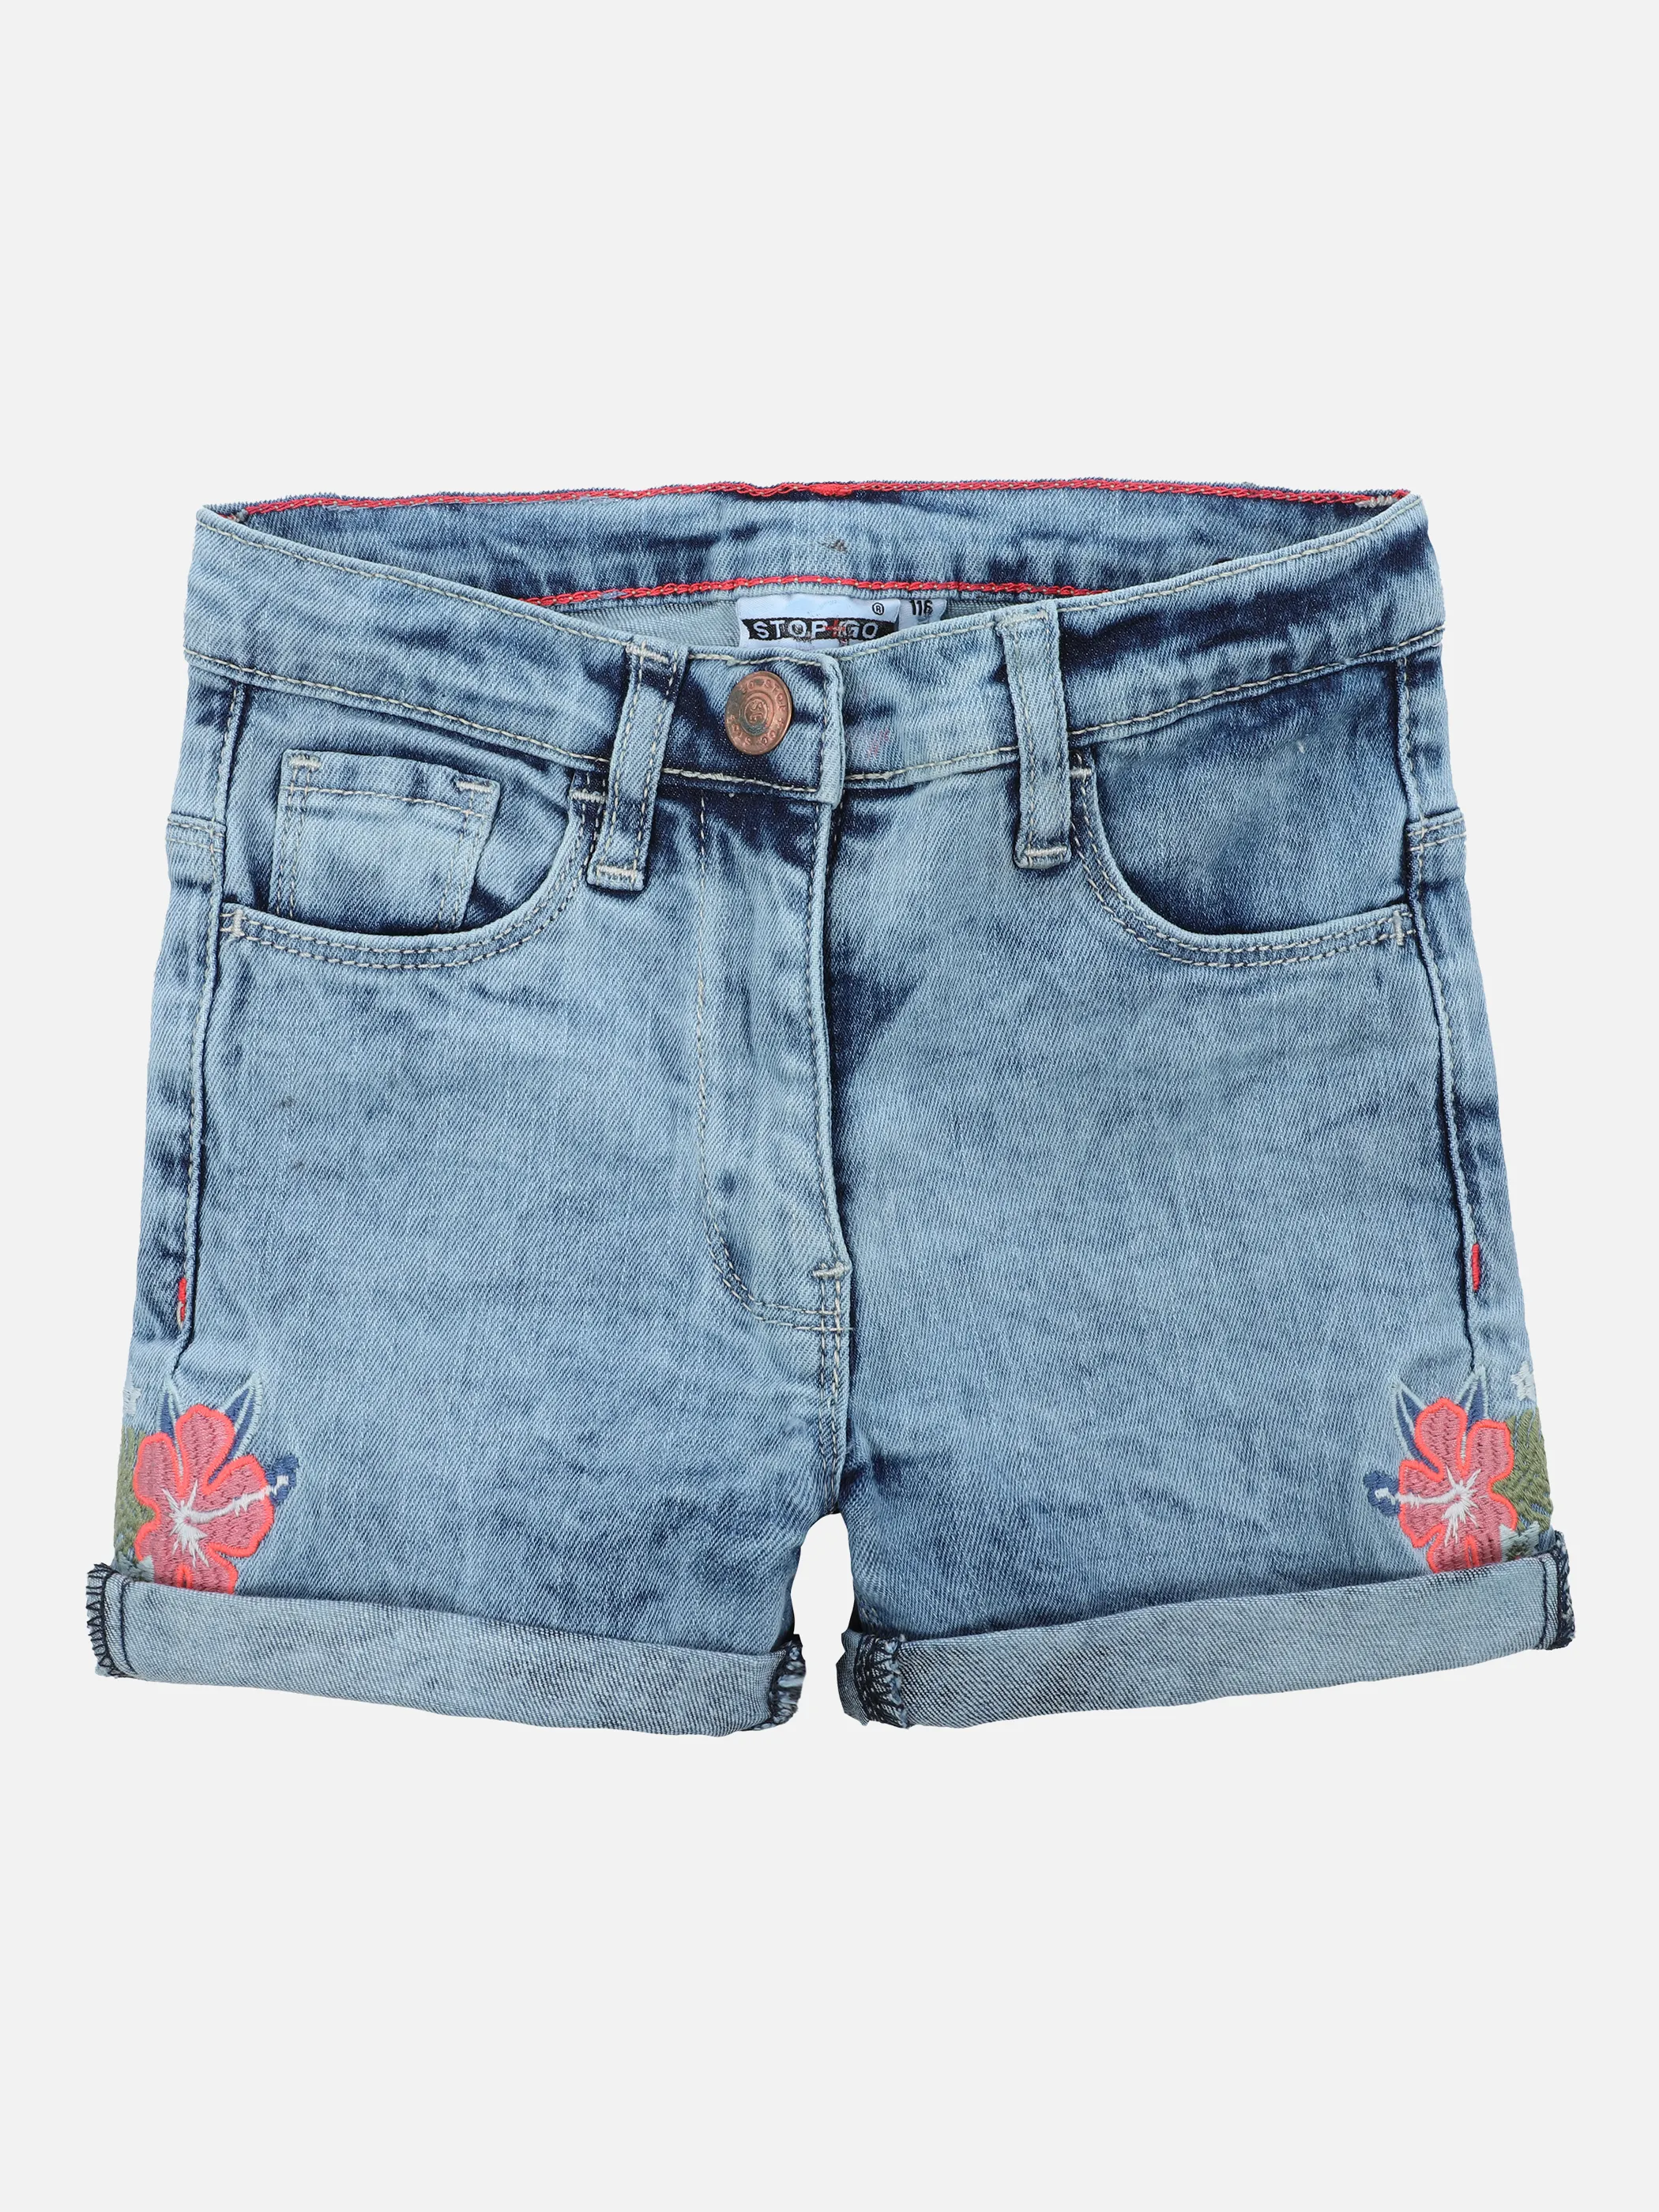 Stop + Go MG Jeans Shorts in mittelblau Blau 853541 MITTELBLAU 1